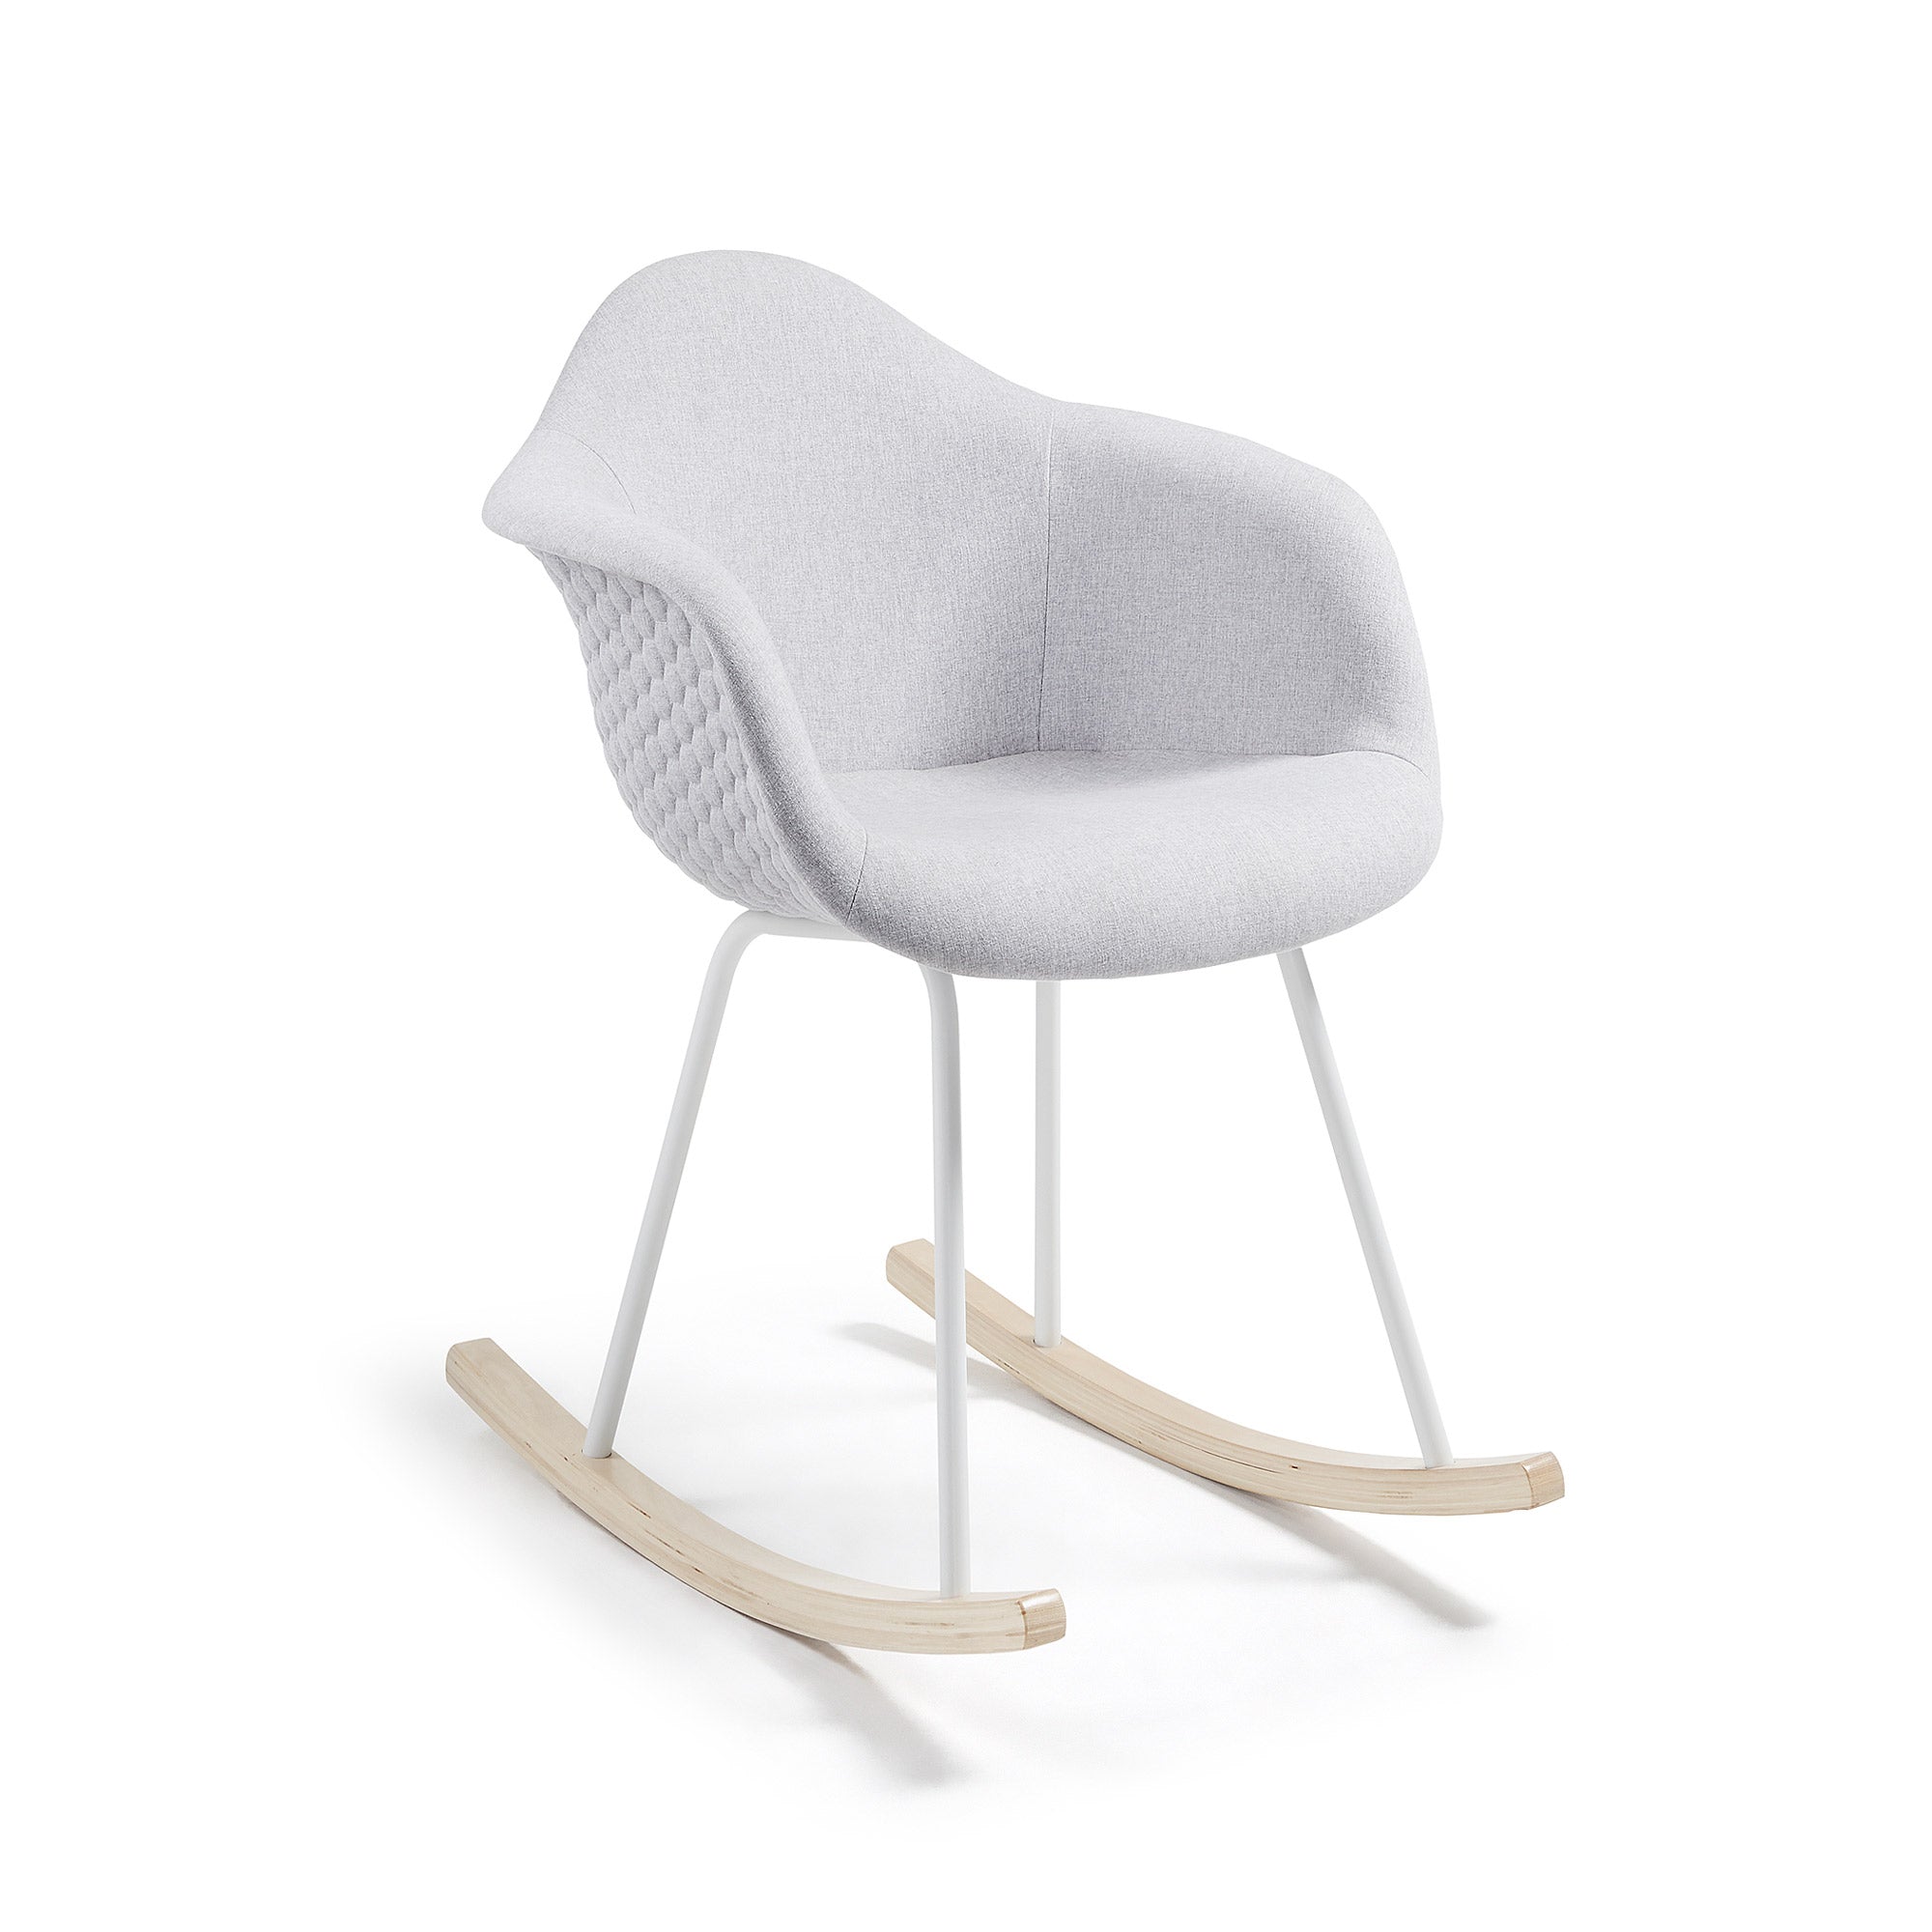 Light grey Kevya rocking chair